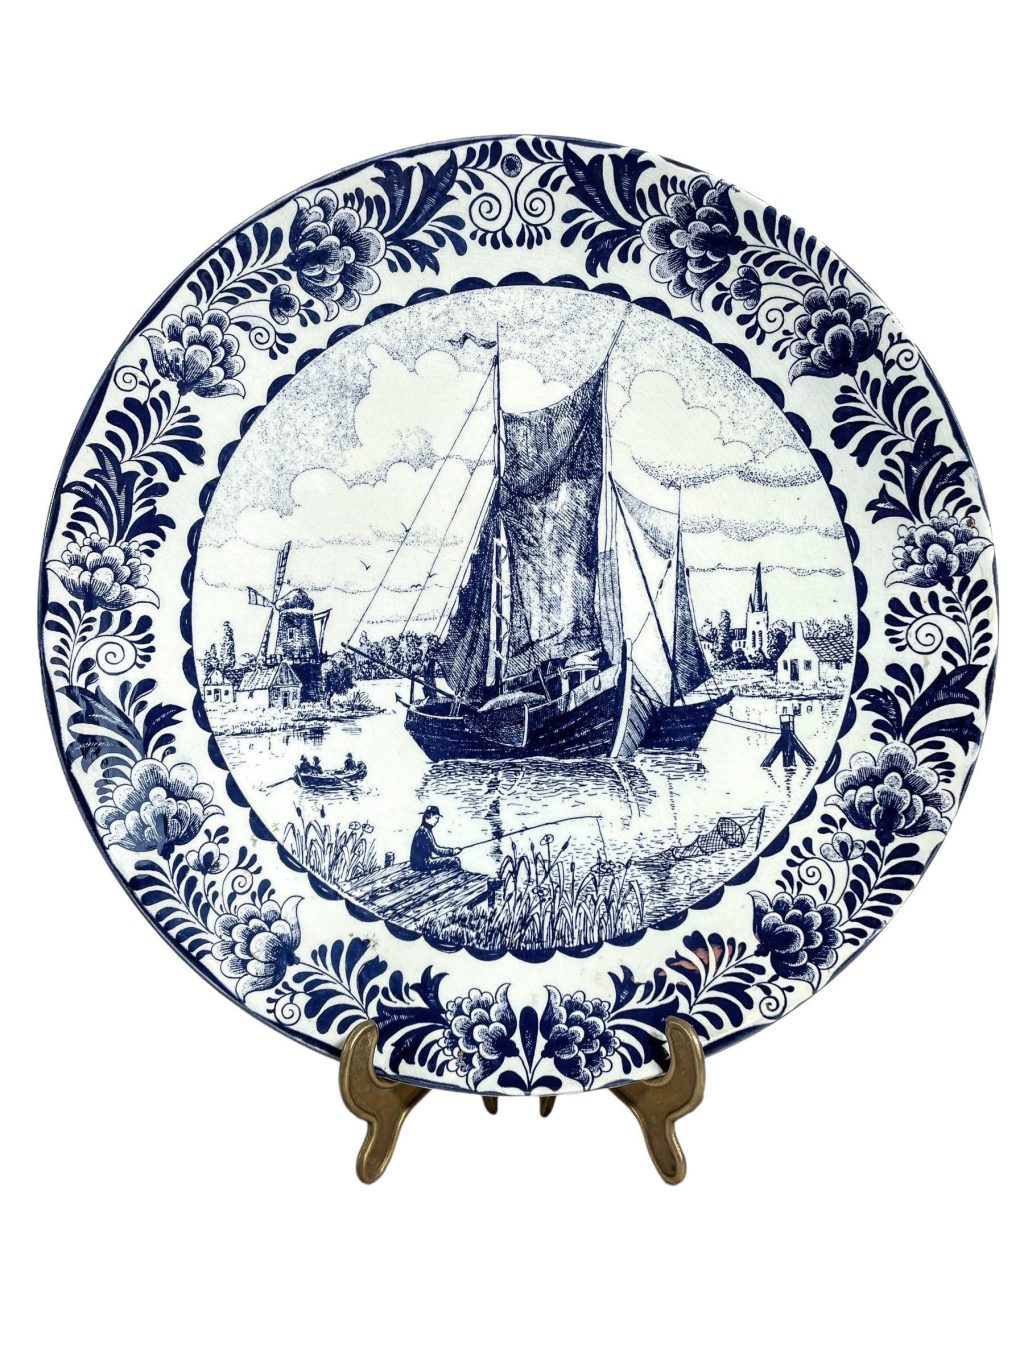 Vintage Dutch Original Blauw Delfts Handmade White Blue Extra Large Dinner Plate Hanging Wall Display Sailing Ships circa 1950-60’s